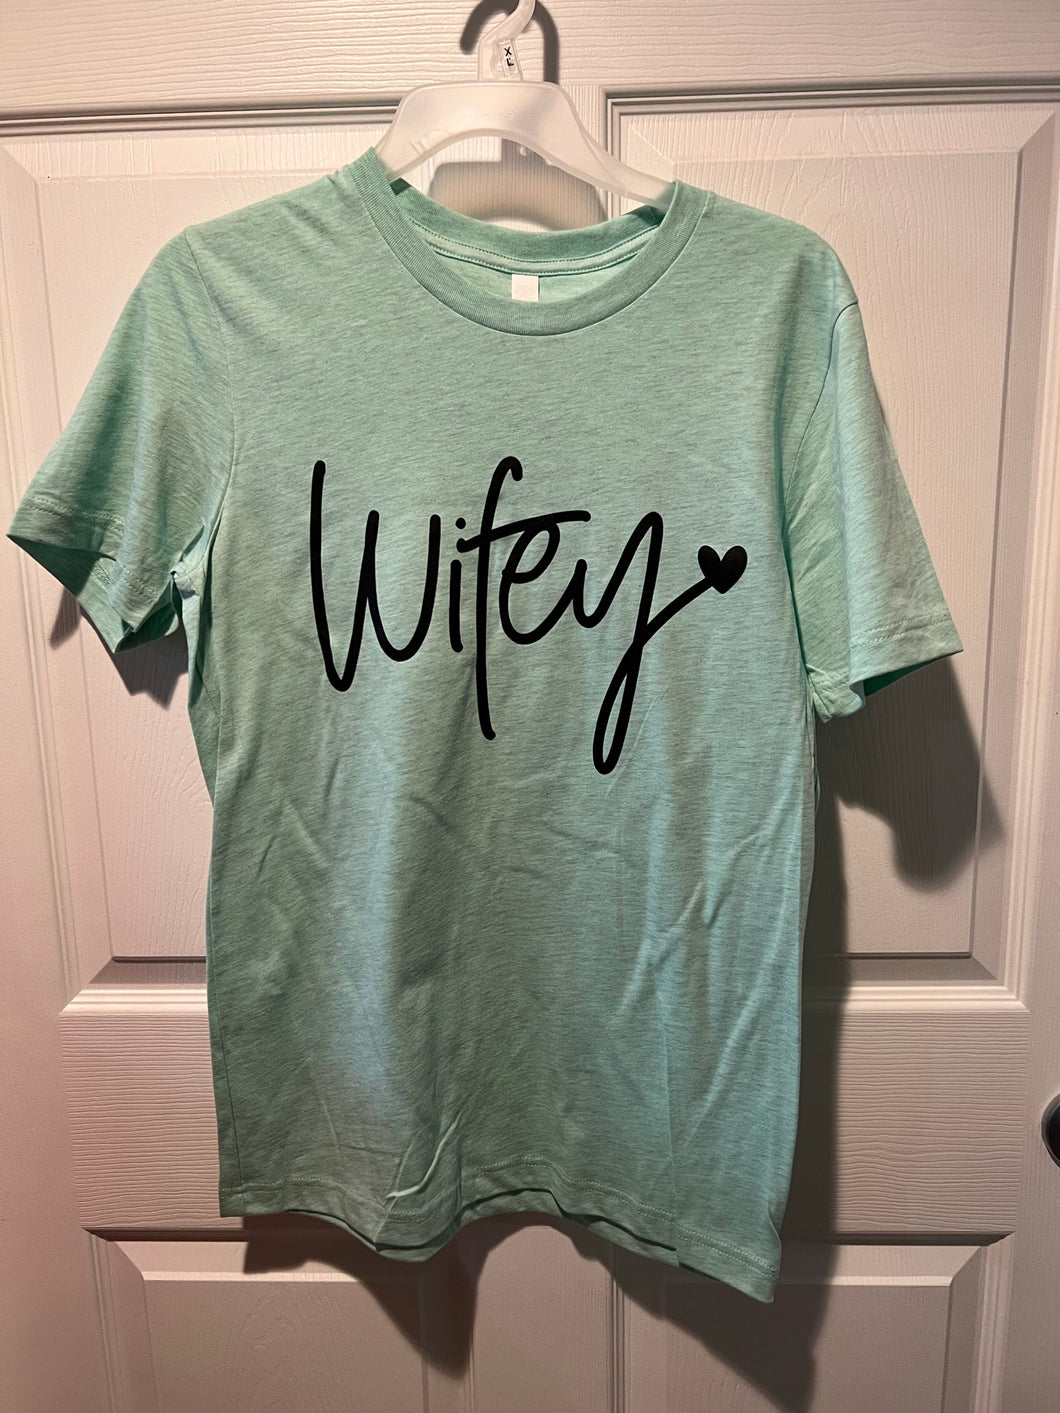 Wifey Shirt - Size Small